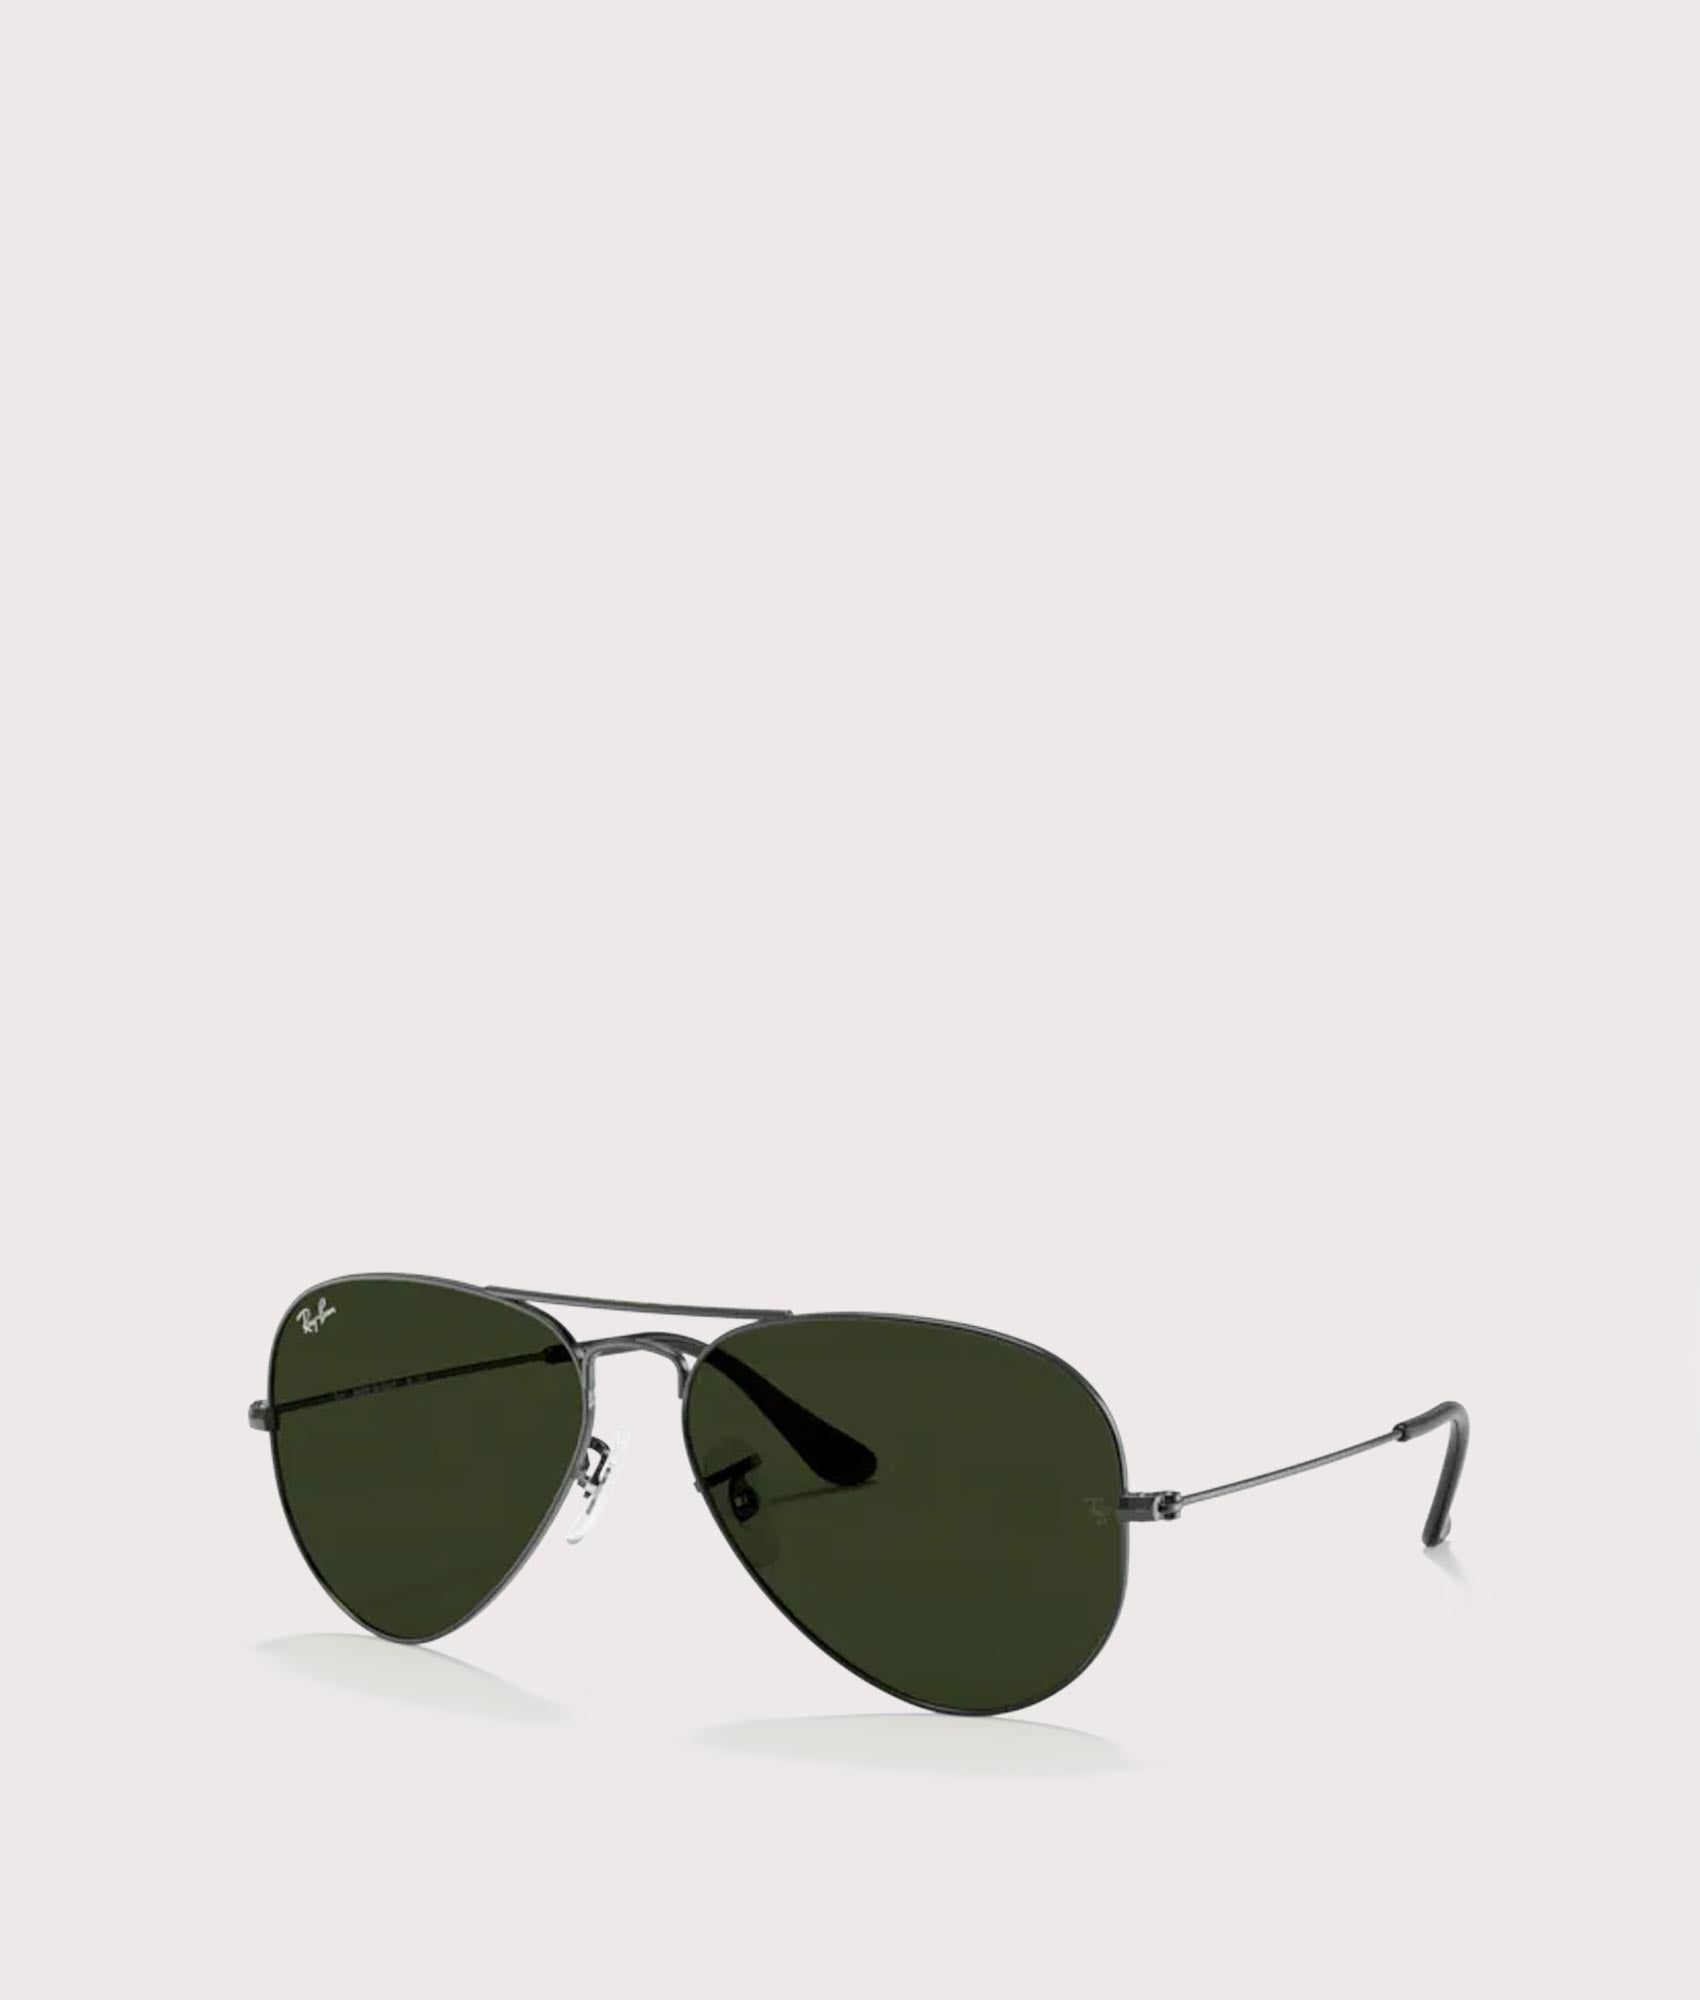 Ray-Ban Mens Aviator Large Metal Sunglasses - Colour: W0879 Polished Gunmetal-Green Lens - Size: 58